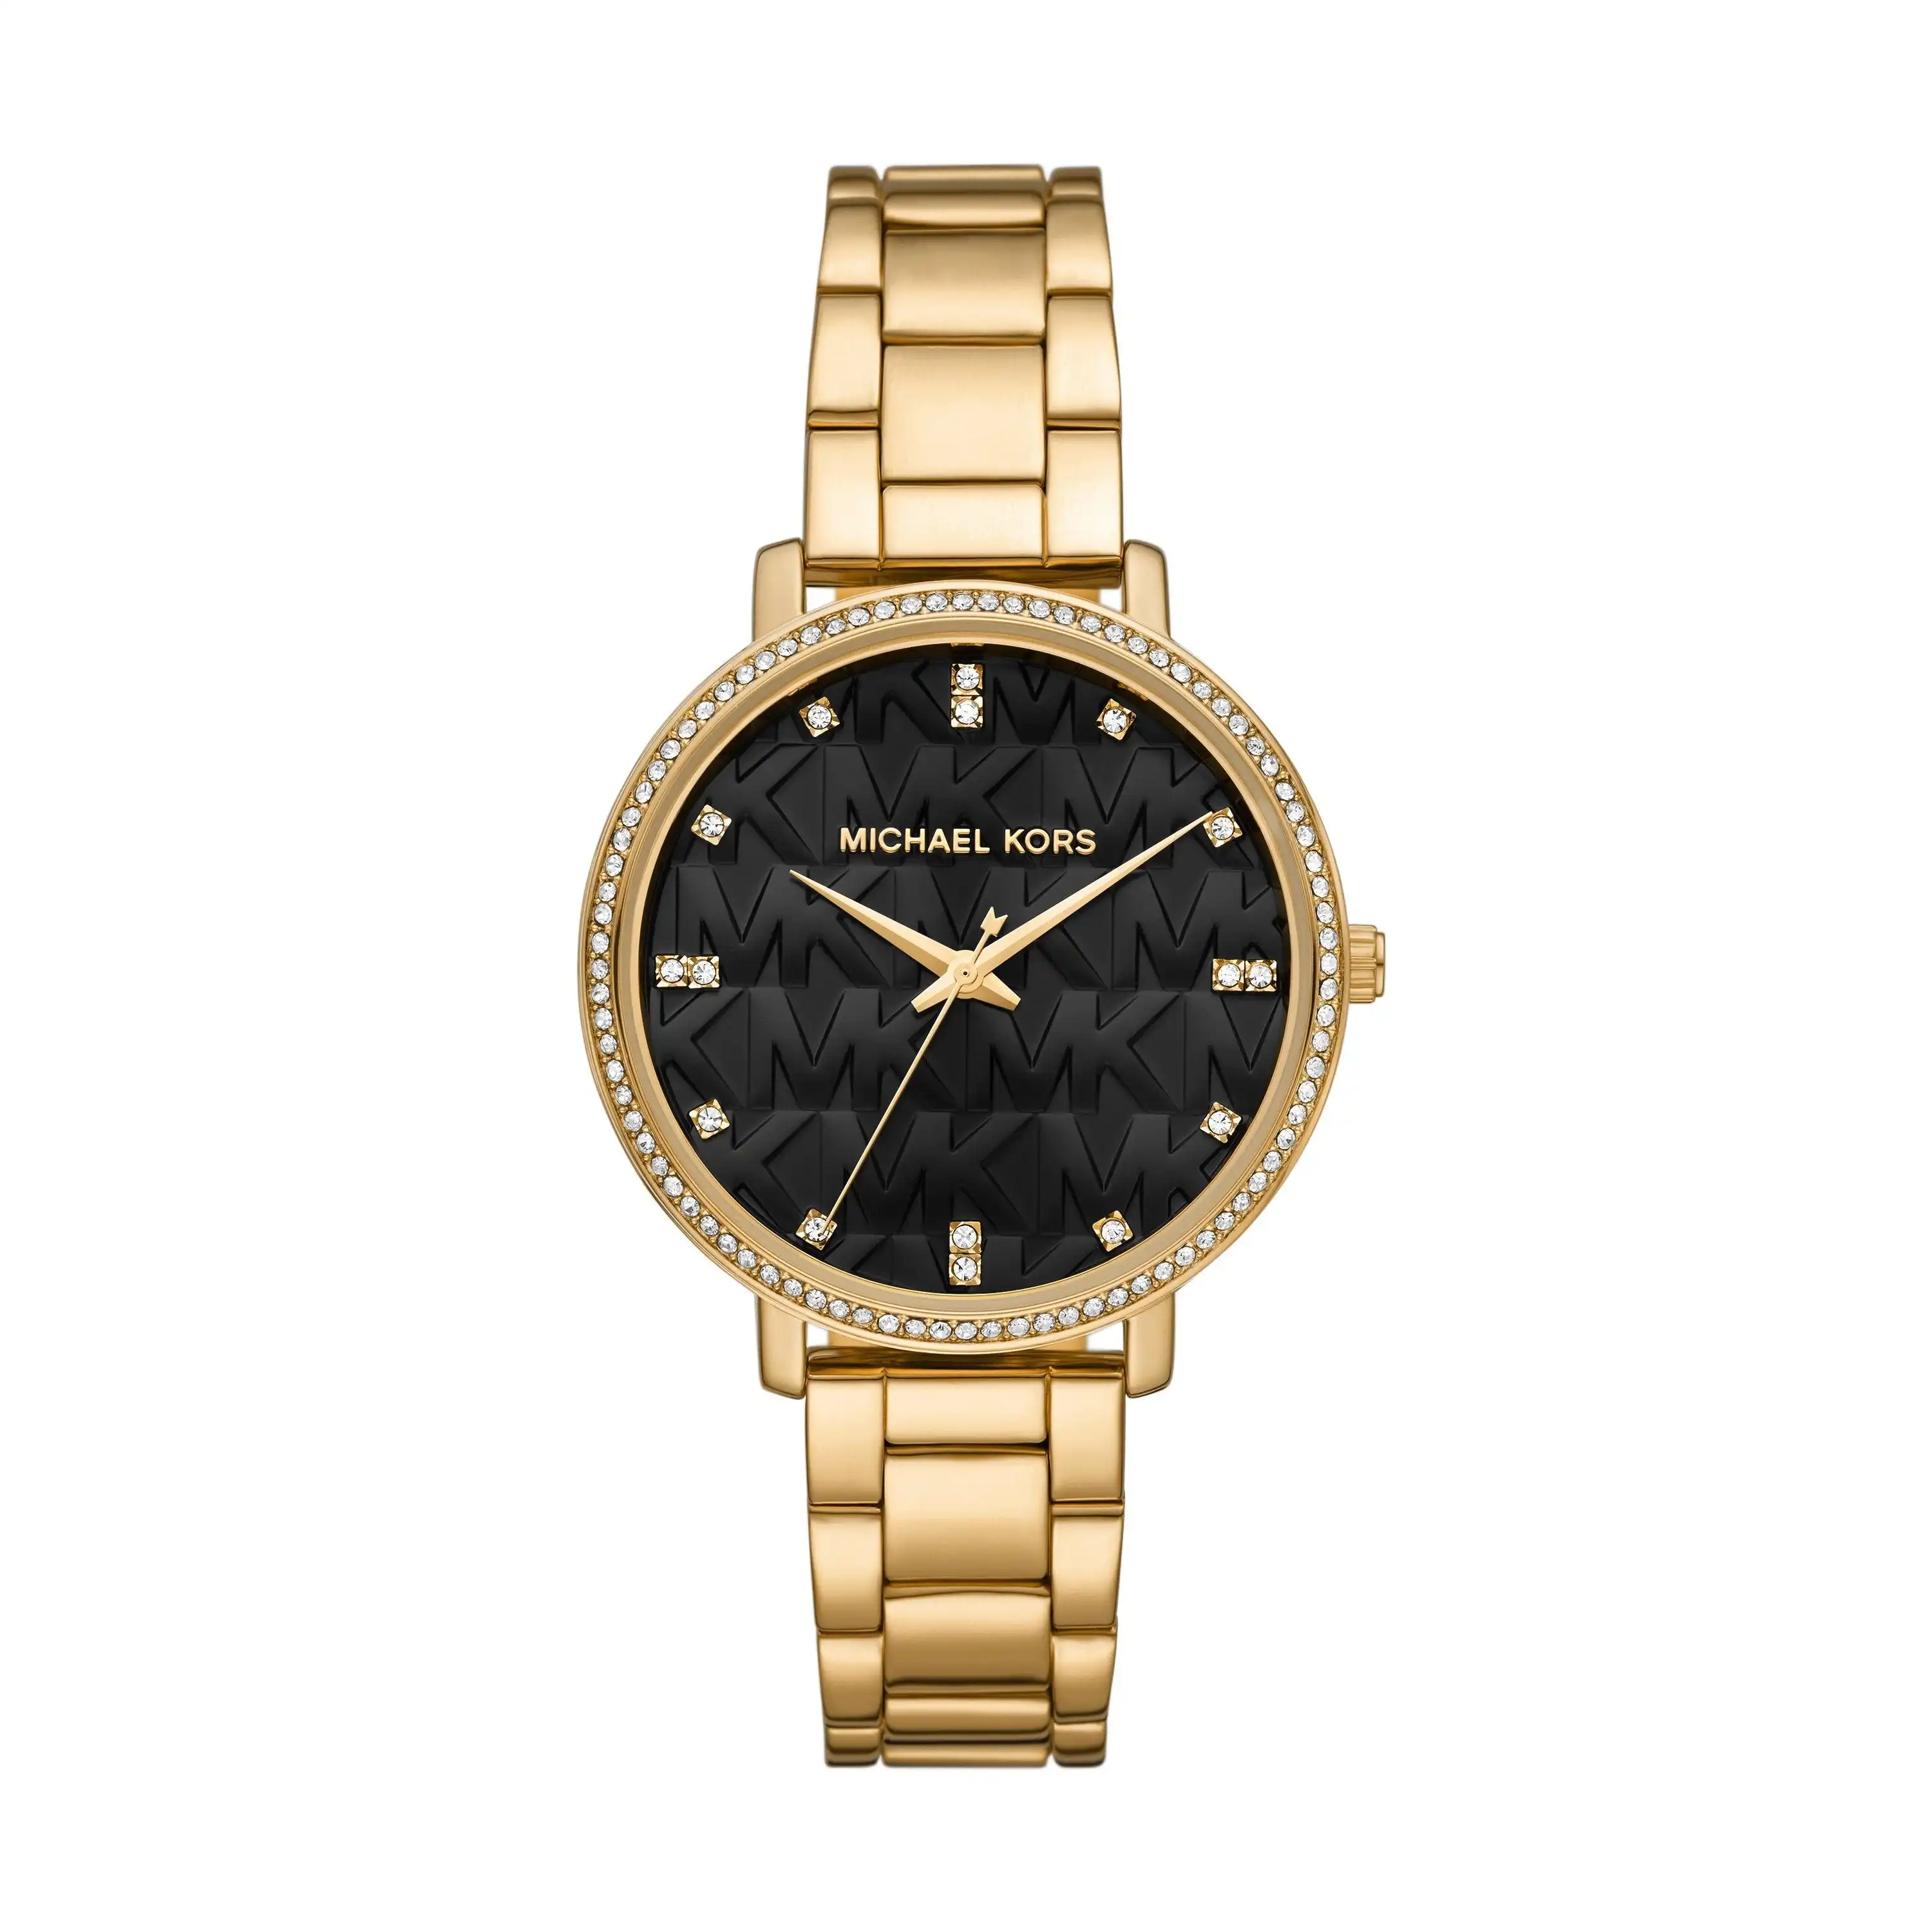 Michael Kors Pyper Black and Gold Women's Watch MK4593